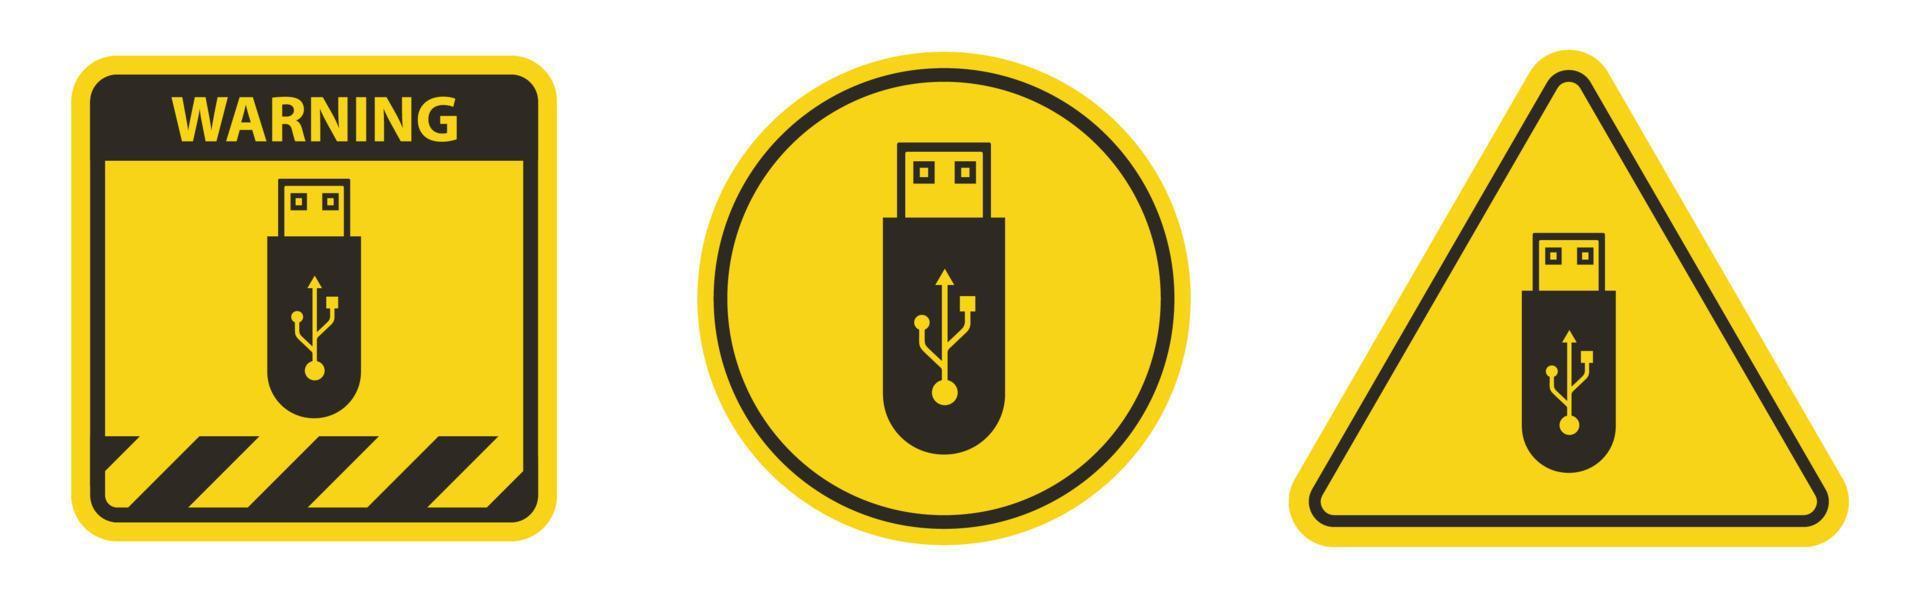 USB-flashstation pictogram symbool teken isoleren op witte achtergrond, vector illustratie eps.10